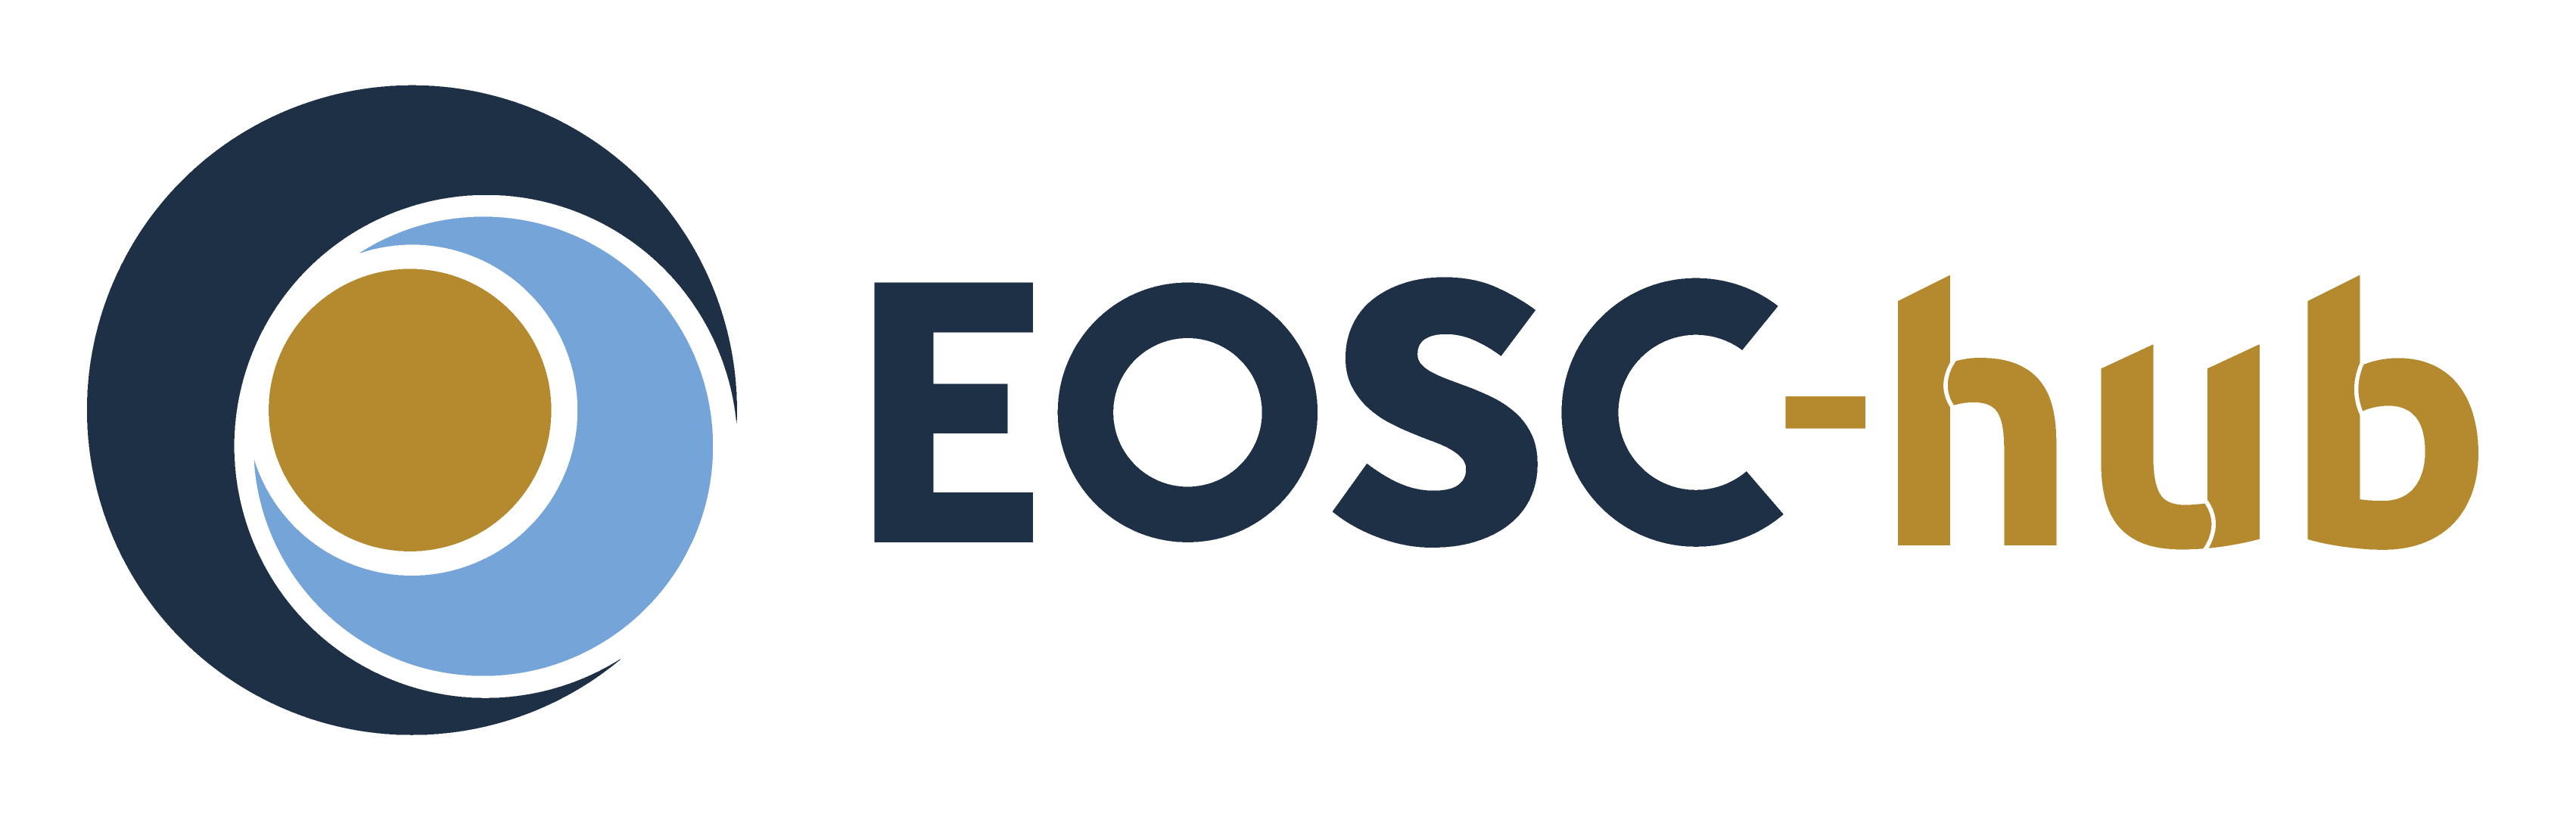 eosc-hub logo